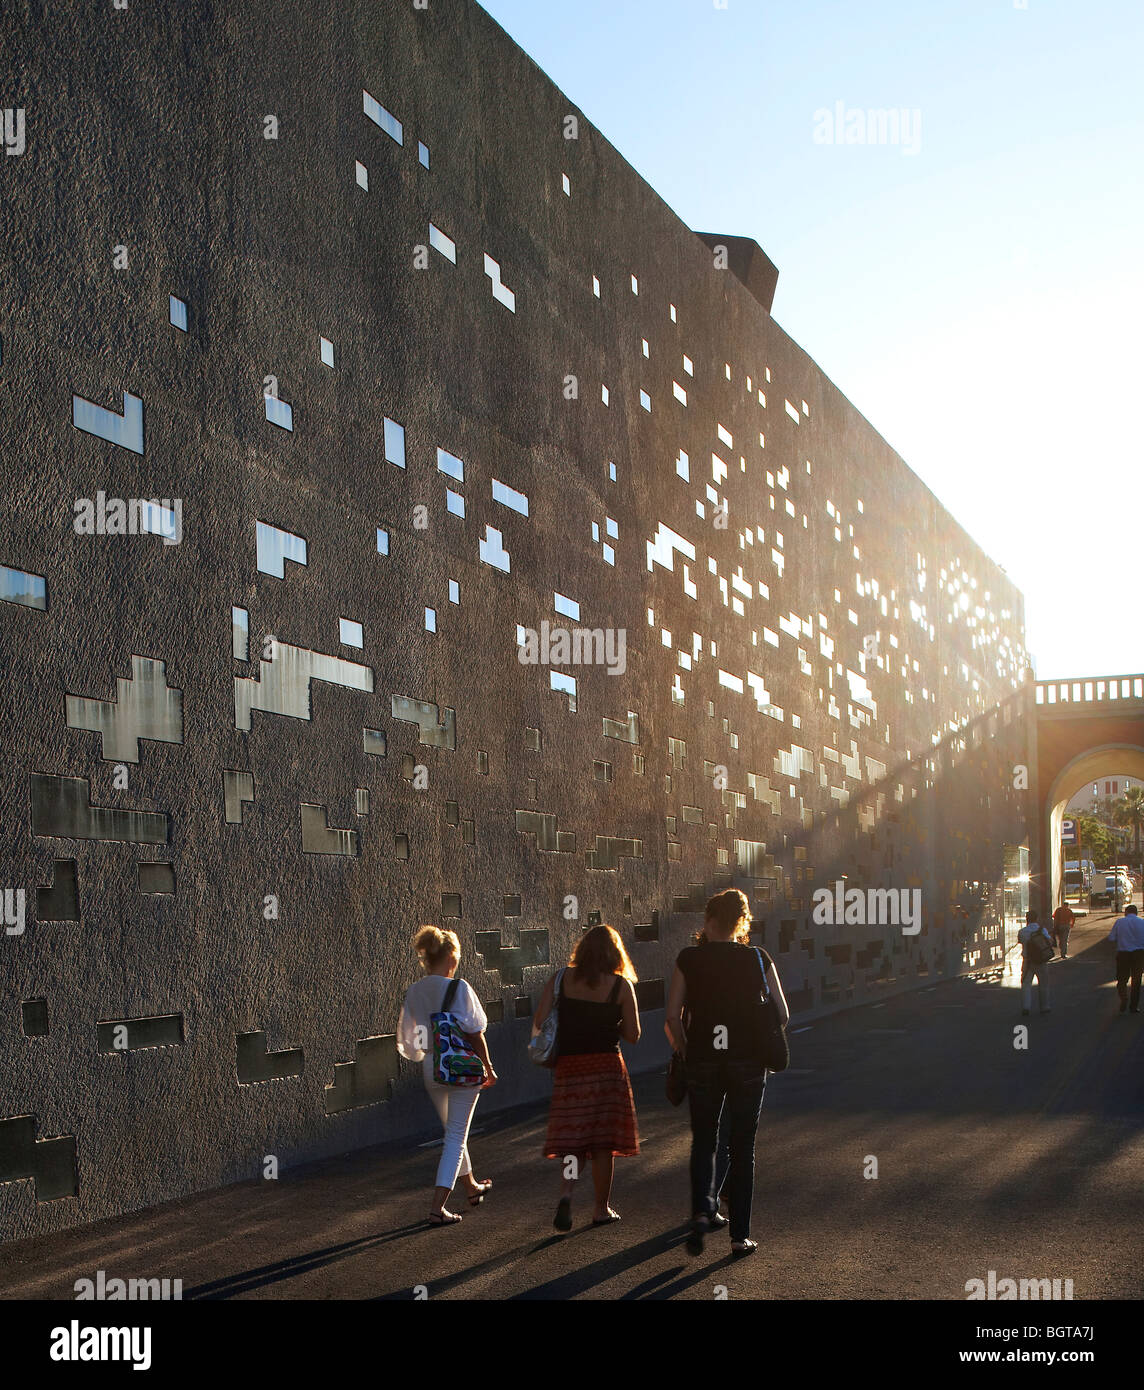 tea tenerife espacio de las artes, view of people walking past the concrete wall in the sunlight Stock Photo